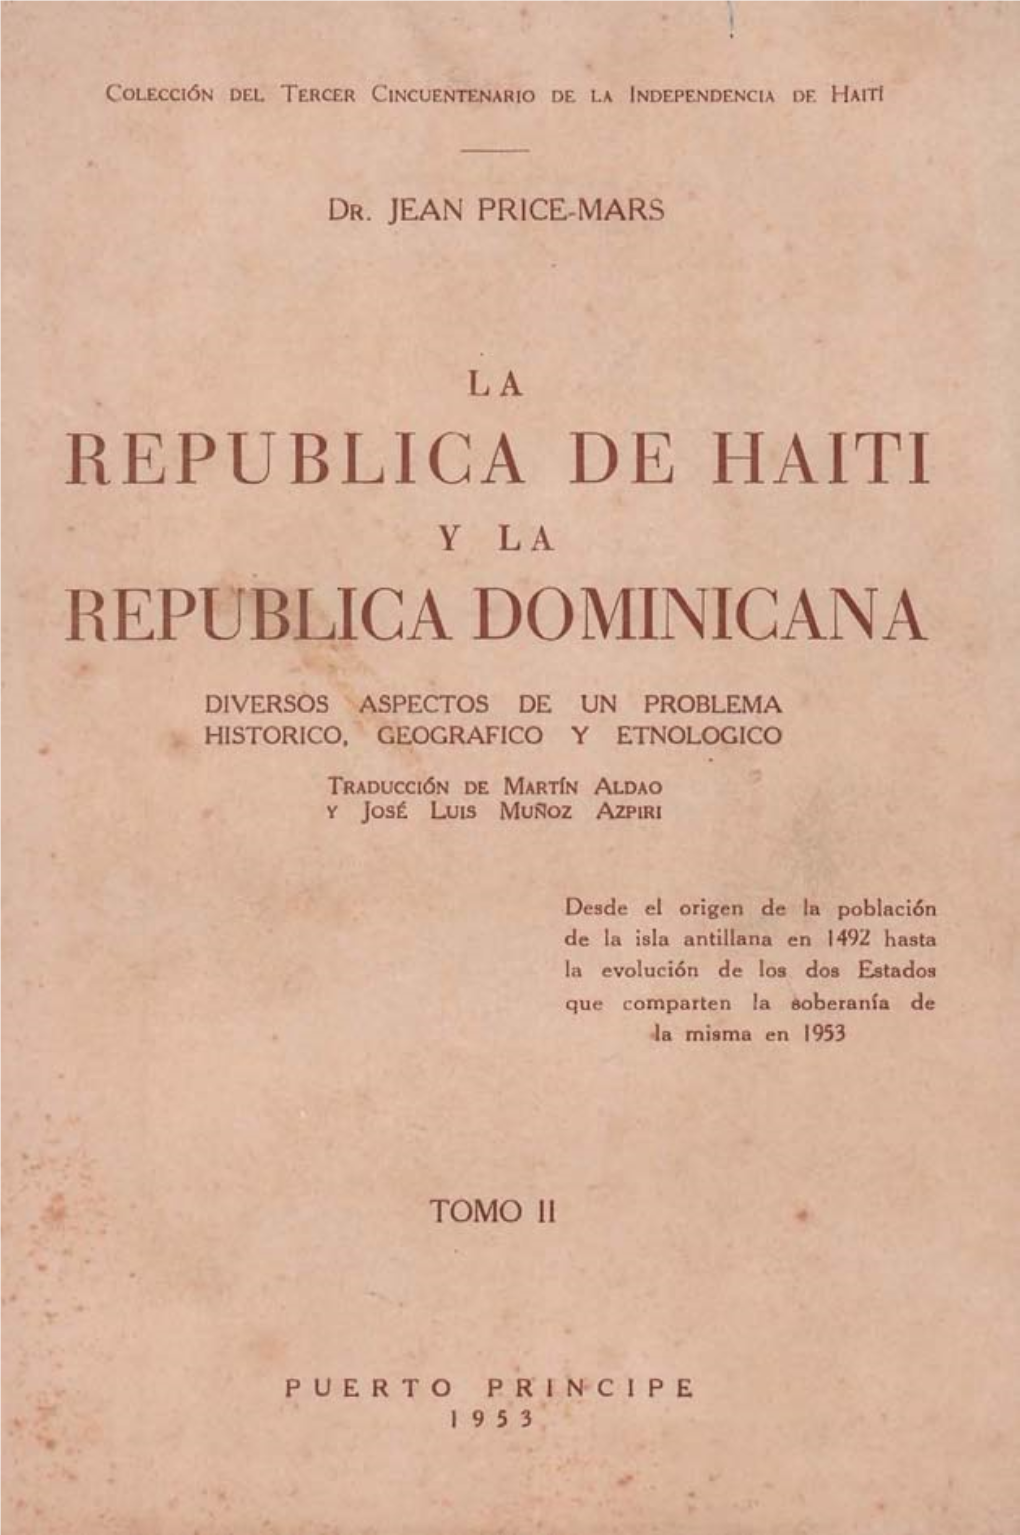 REPUBLICA DE HAITI Y LA REPUBLICA DO MINICAN A